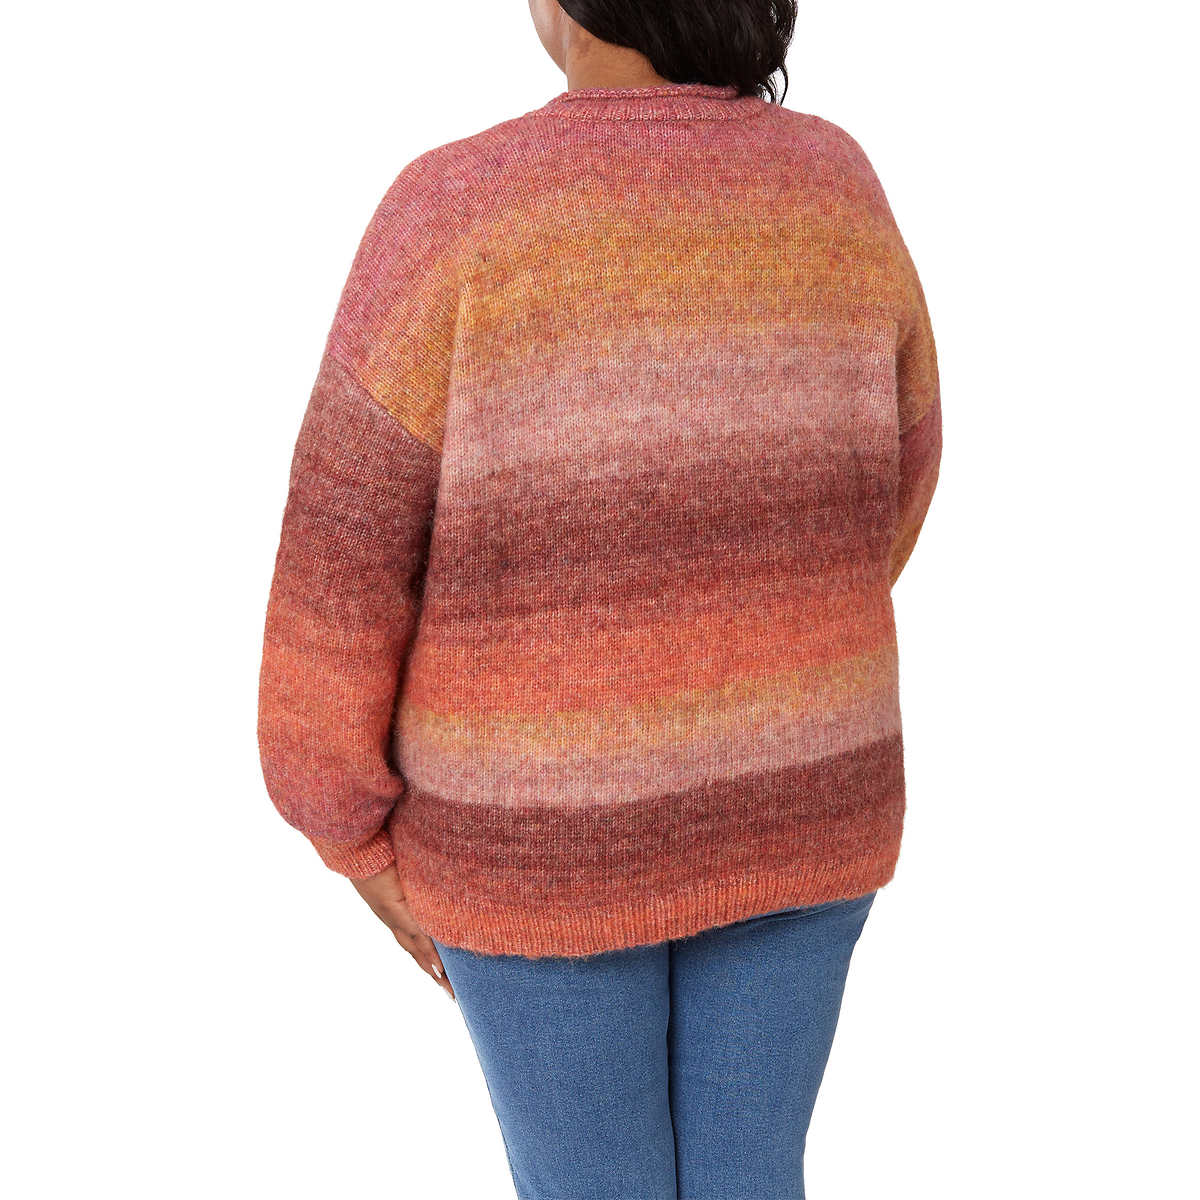 Briggs Women's Plus Cozy V-Neck Ombre Space Dye Soft Knitt Sweater